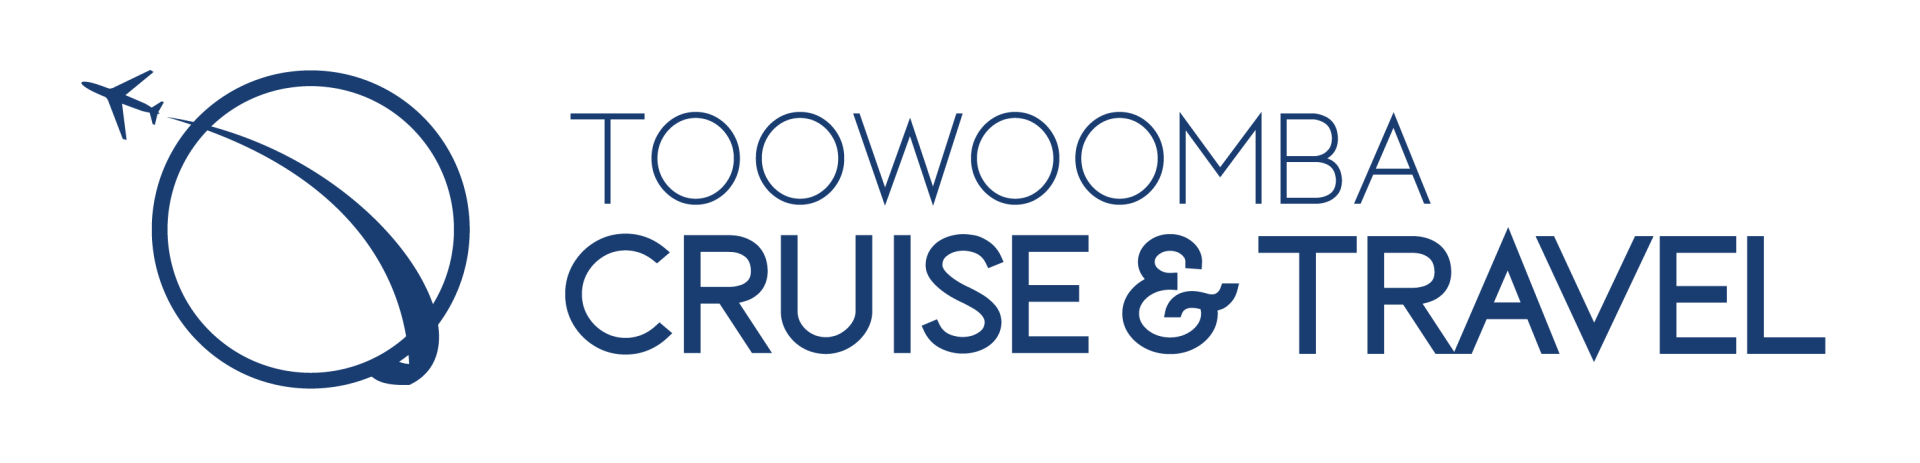 cruise and travel toowoomba